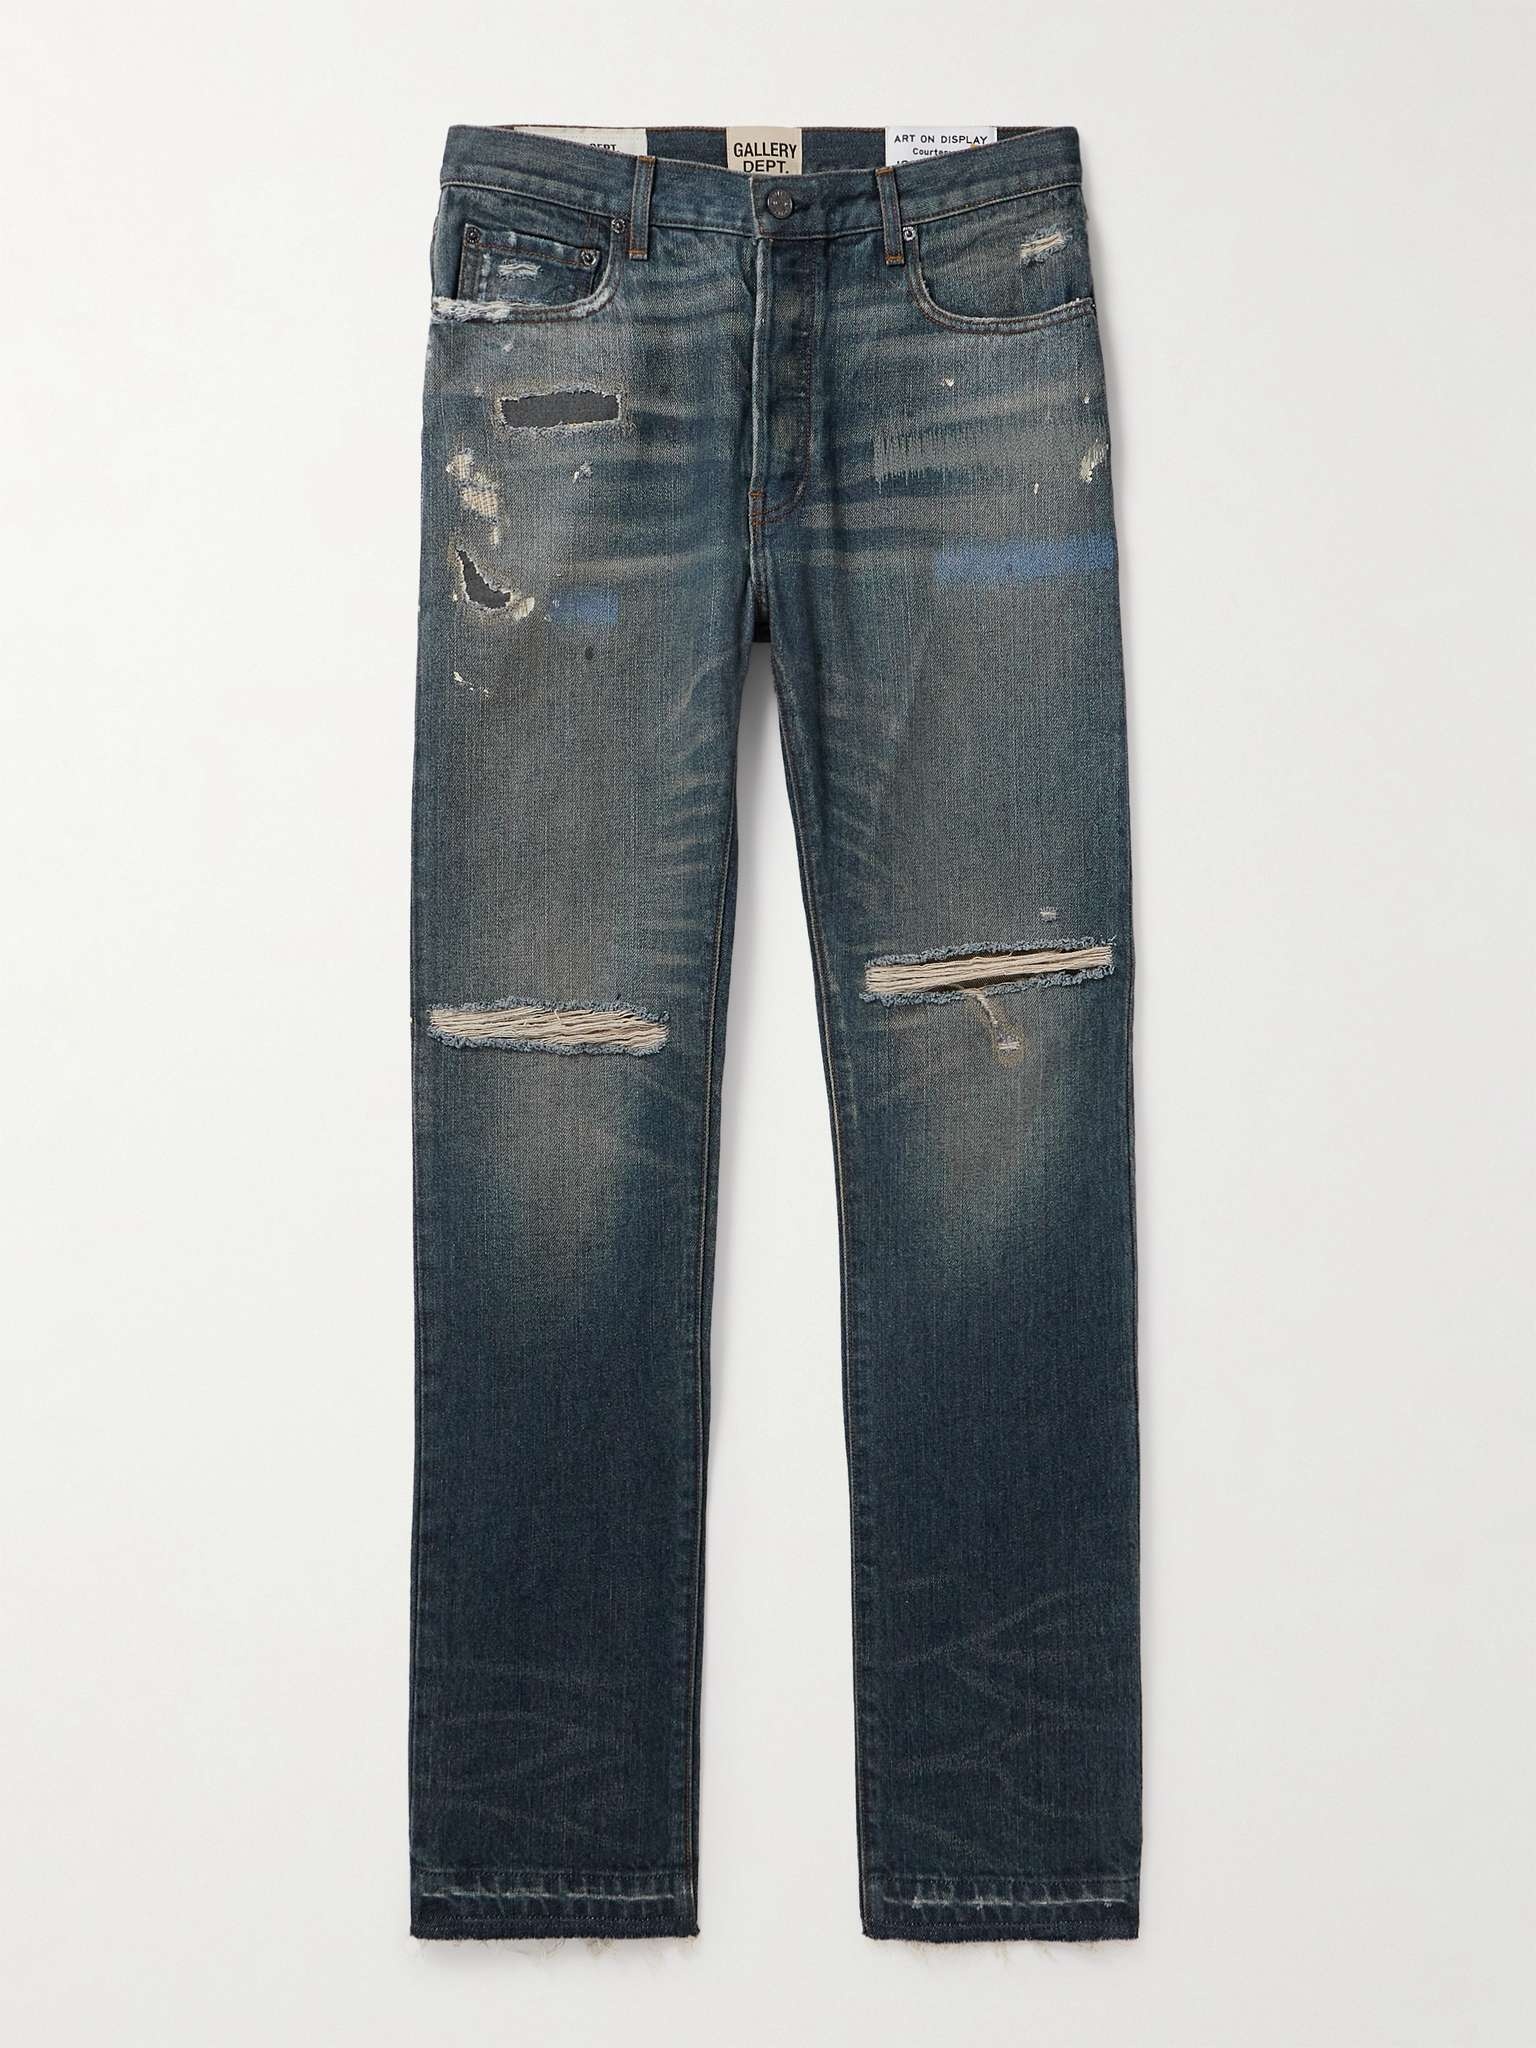 Starr 5001 Straight-Leg Paint-Splattered Distressed Jeans - 1